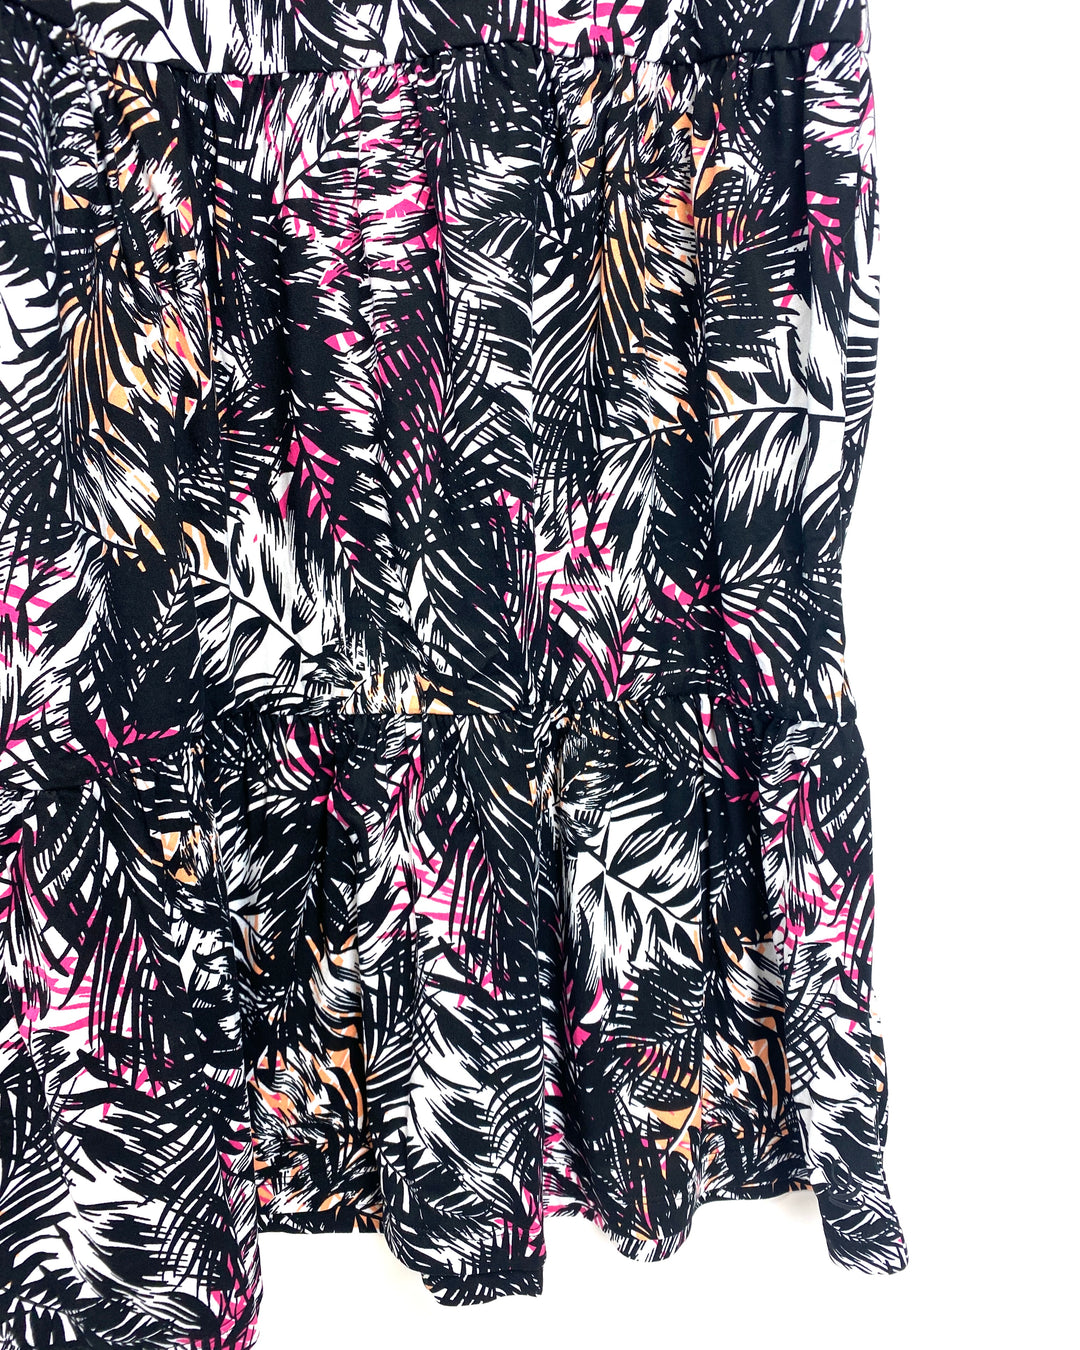 Black And Pink Tropical Scoop Neck Maxi Dress - Small/Medium